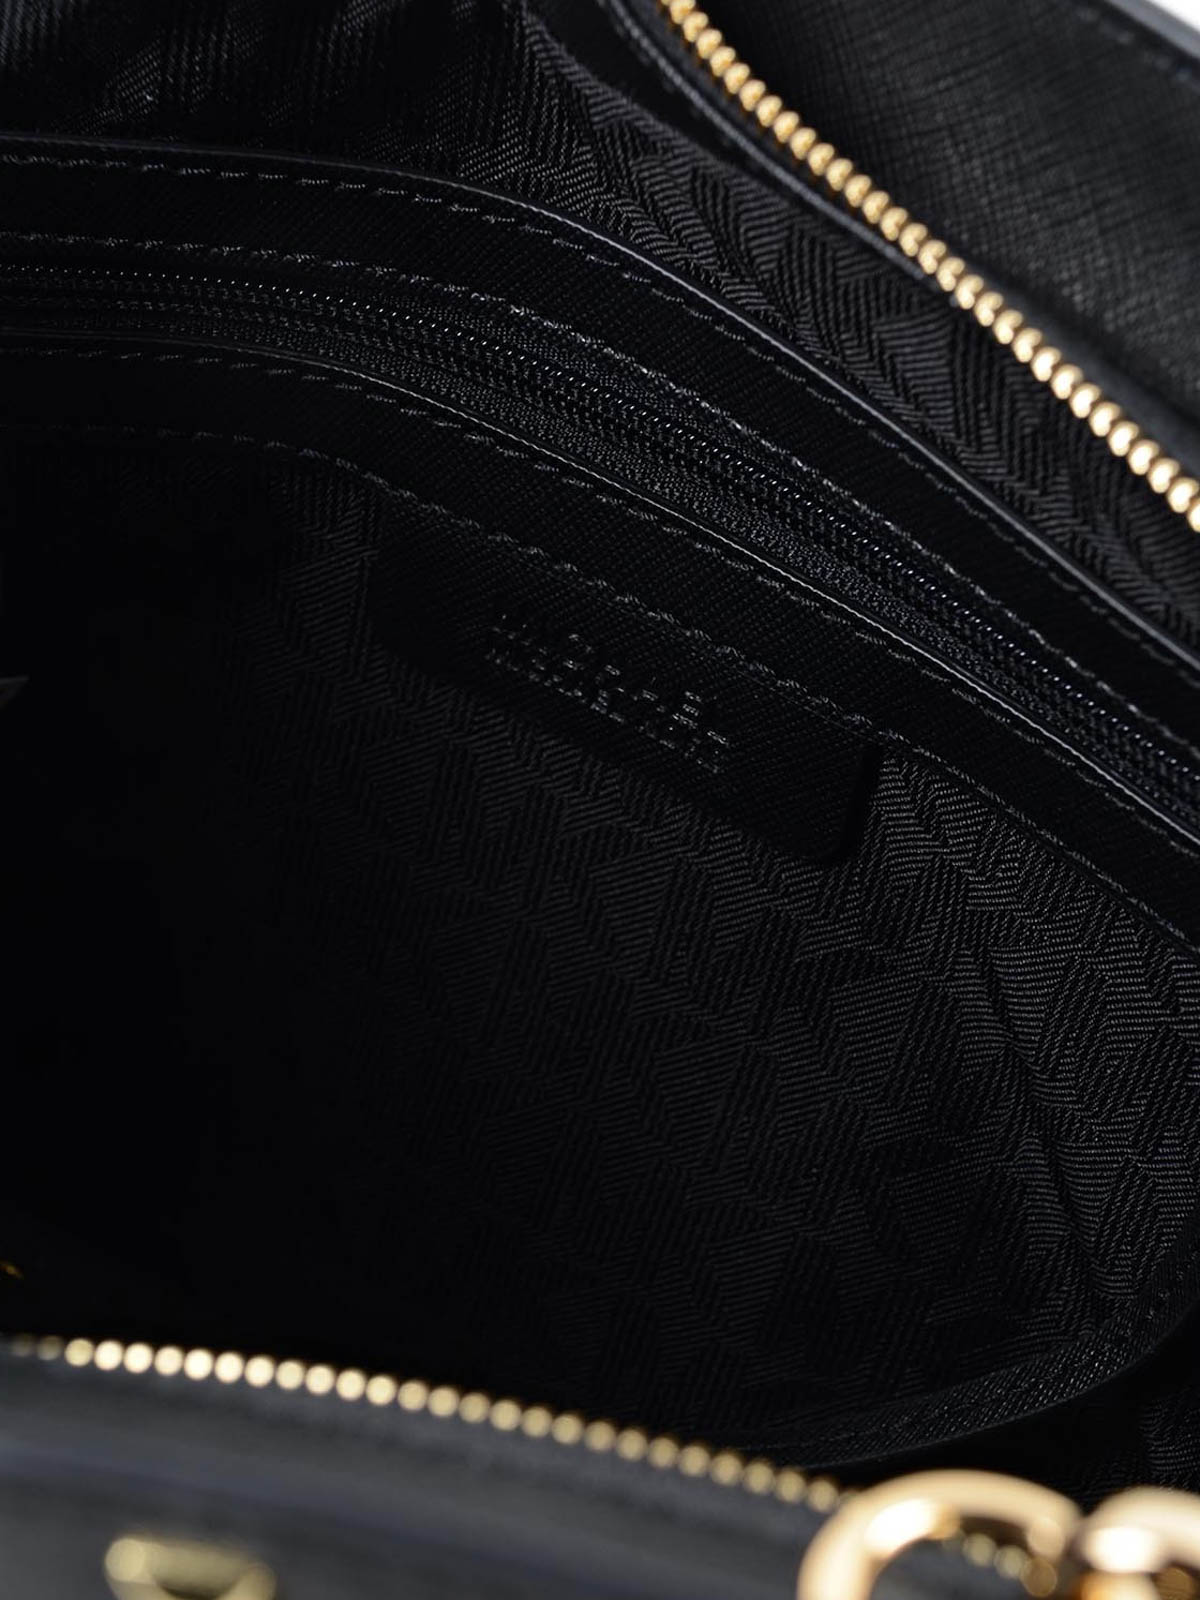 Michael Kors Selma Studded Saffiano-Leather Cross-Body Bag in Black